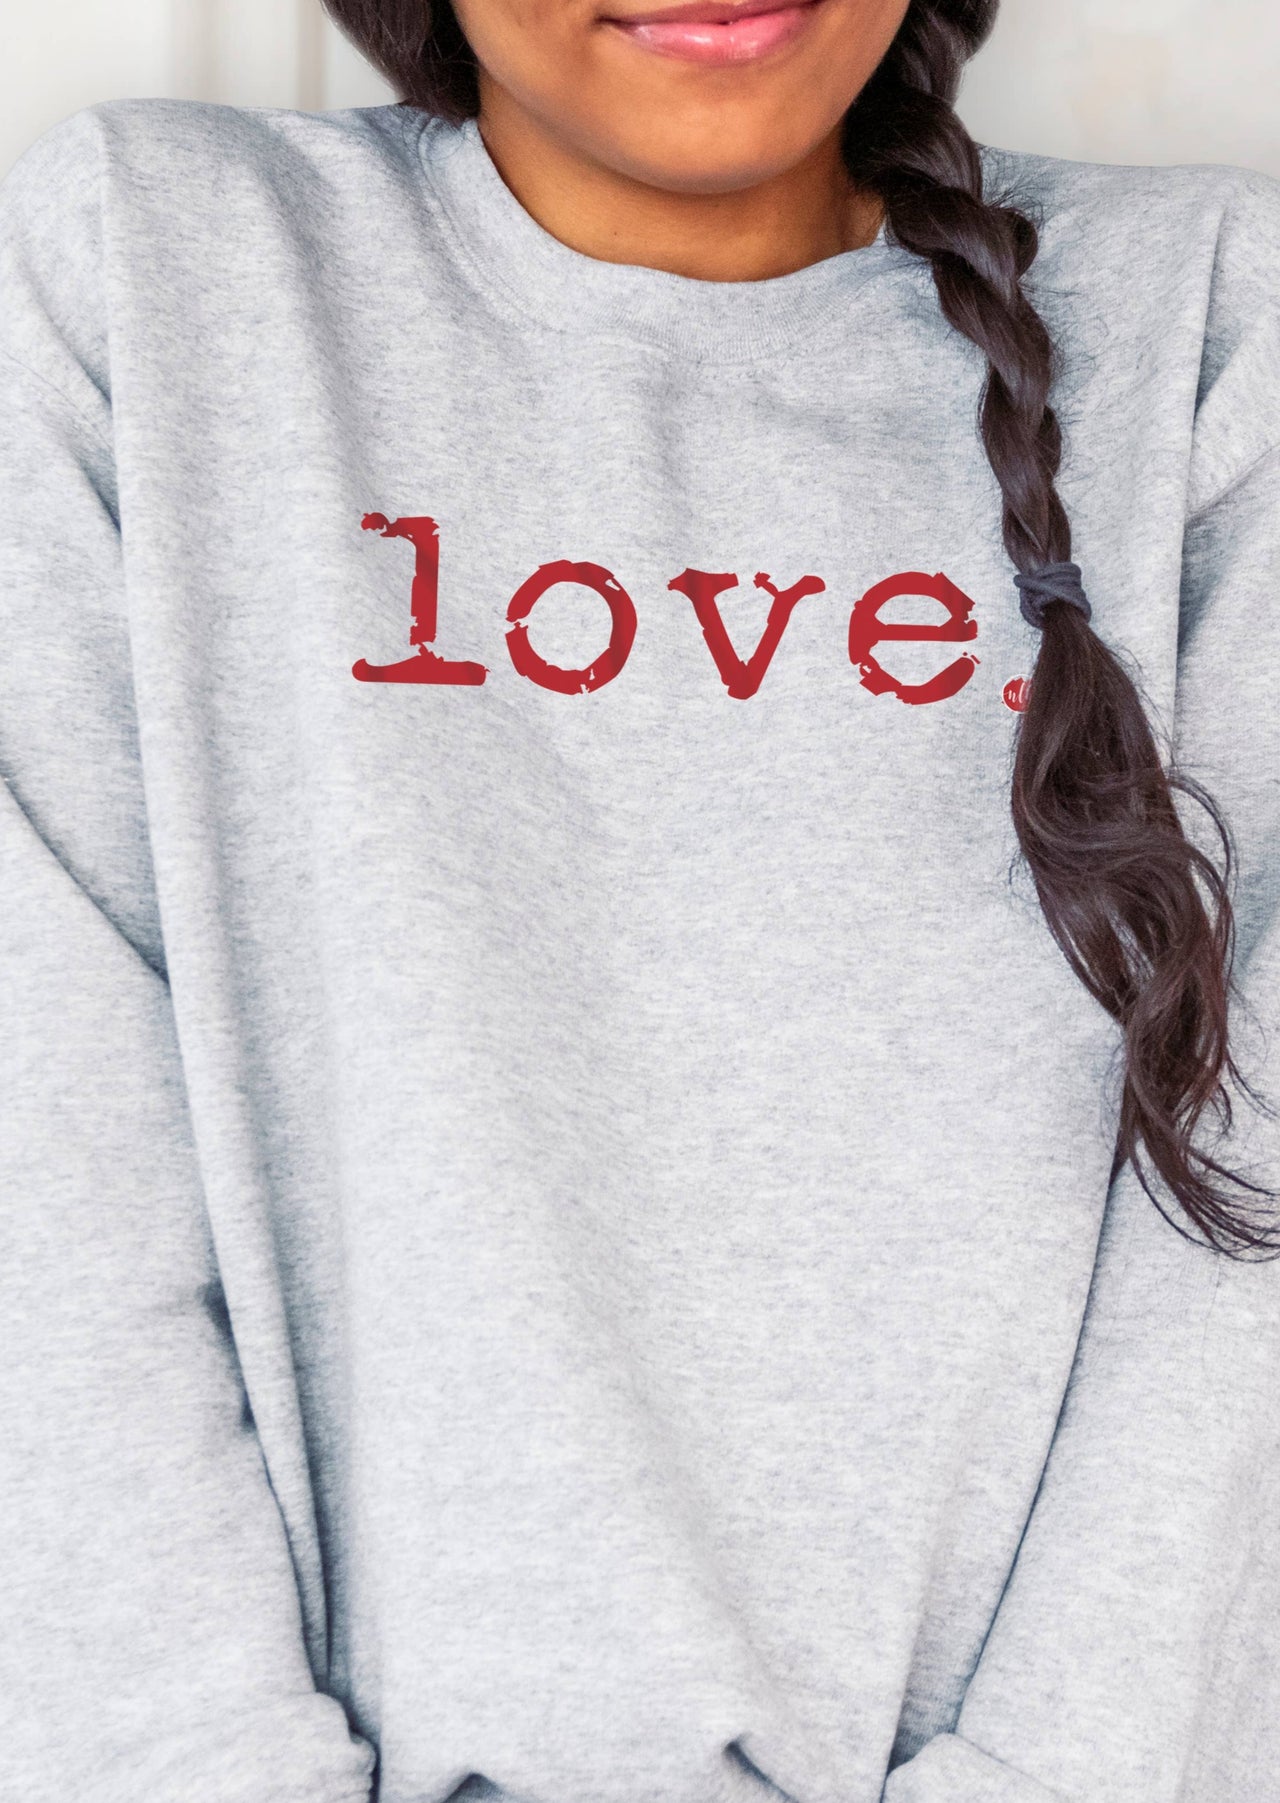 LOVE Sweatshirt Never Lose Hope Designs Large